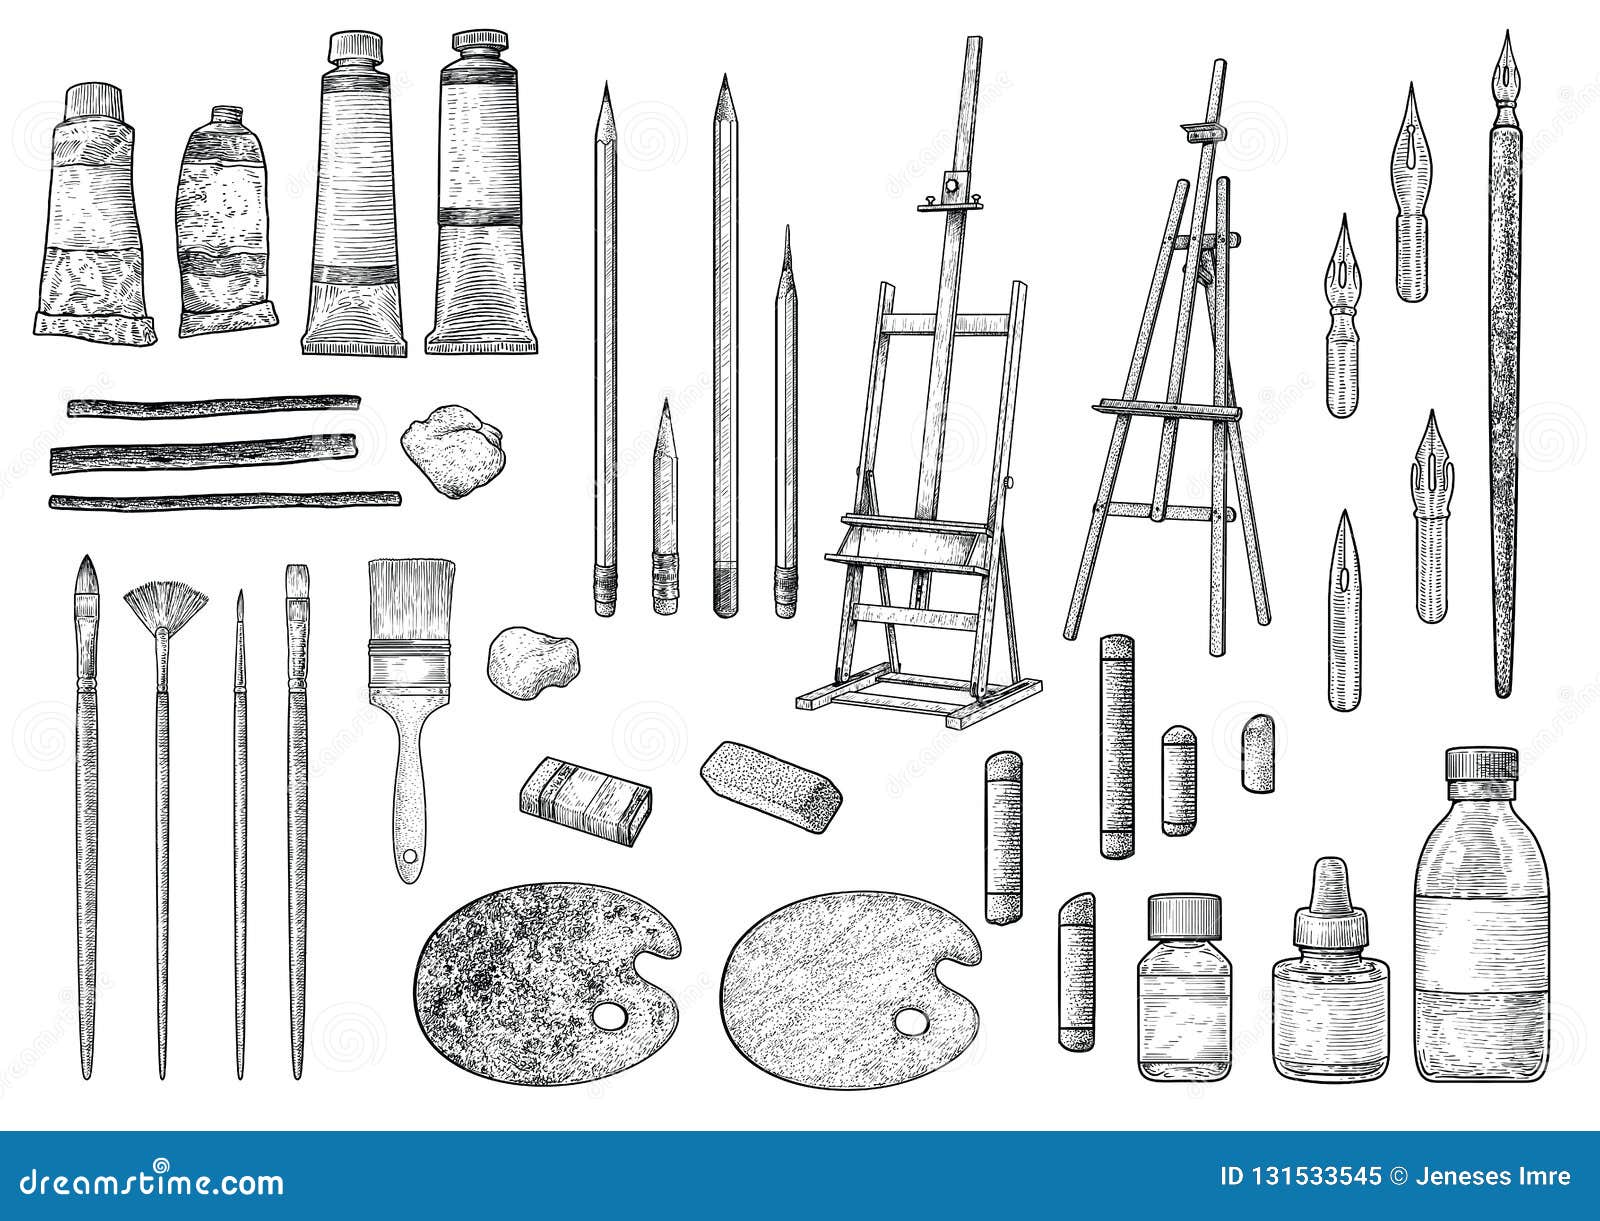 lápices de Dibujo para Dibujar Herramientas de Arte de Palo de carbón HERCHR 50 Piezas de lápices de Dibujo para Artistas 